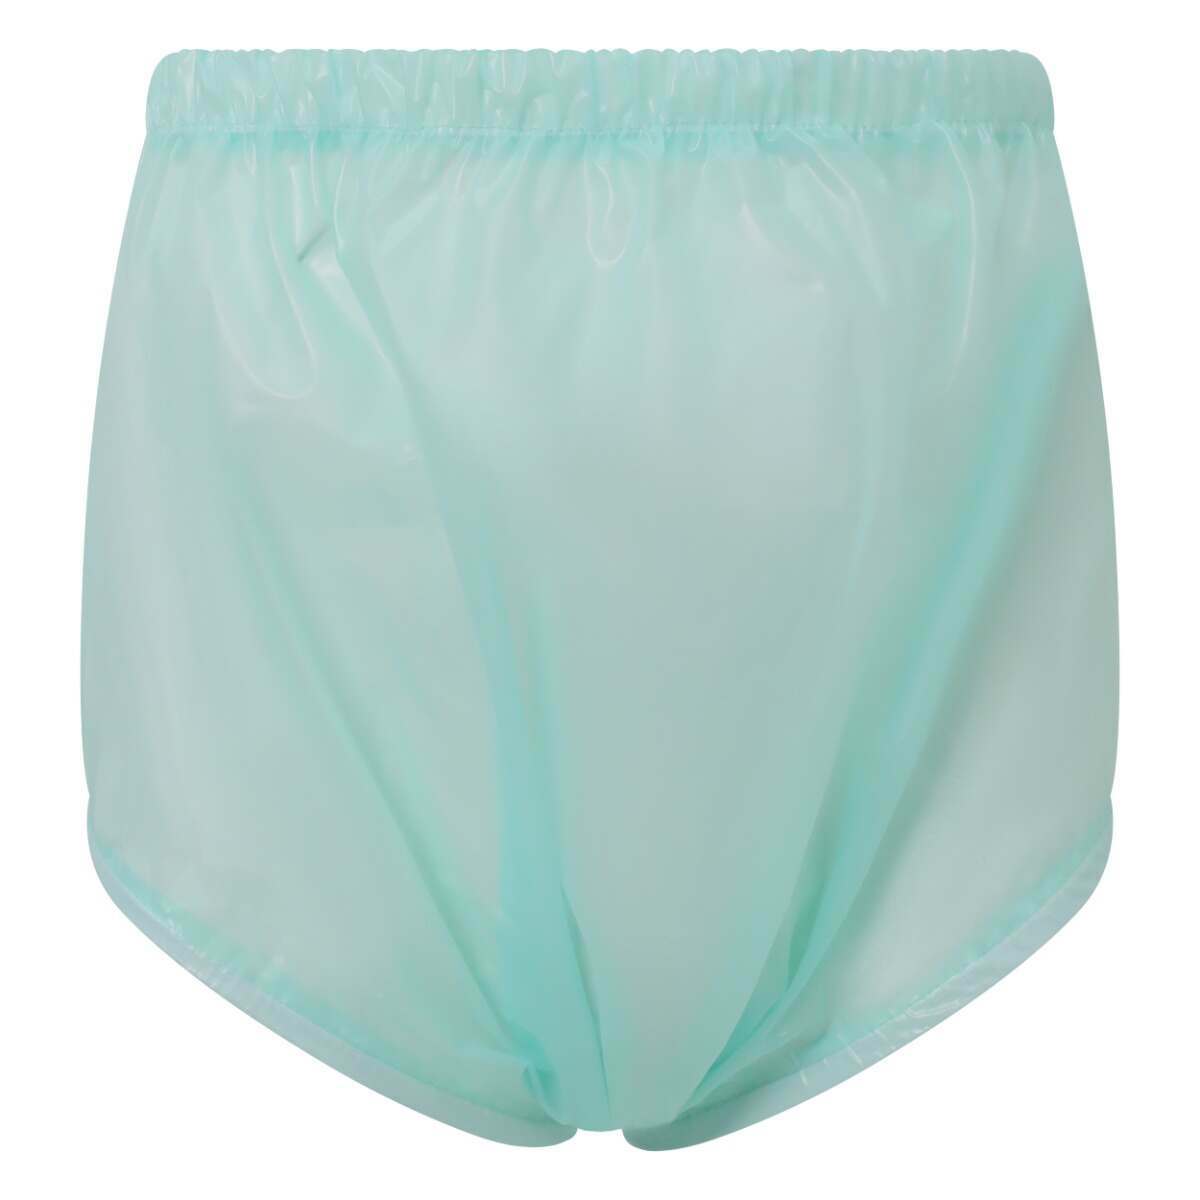 https://cdn.incontinenceshop.com/media/catalog/product/image/11156ebe9/drylife-premium-plastic-pants-with-wide-waistband-mint-xx-large.jpg